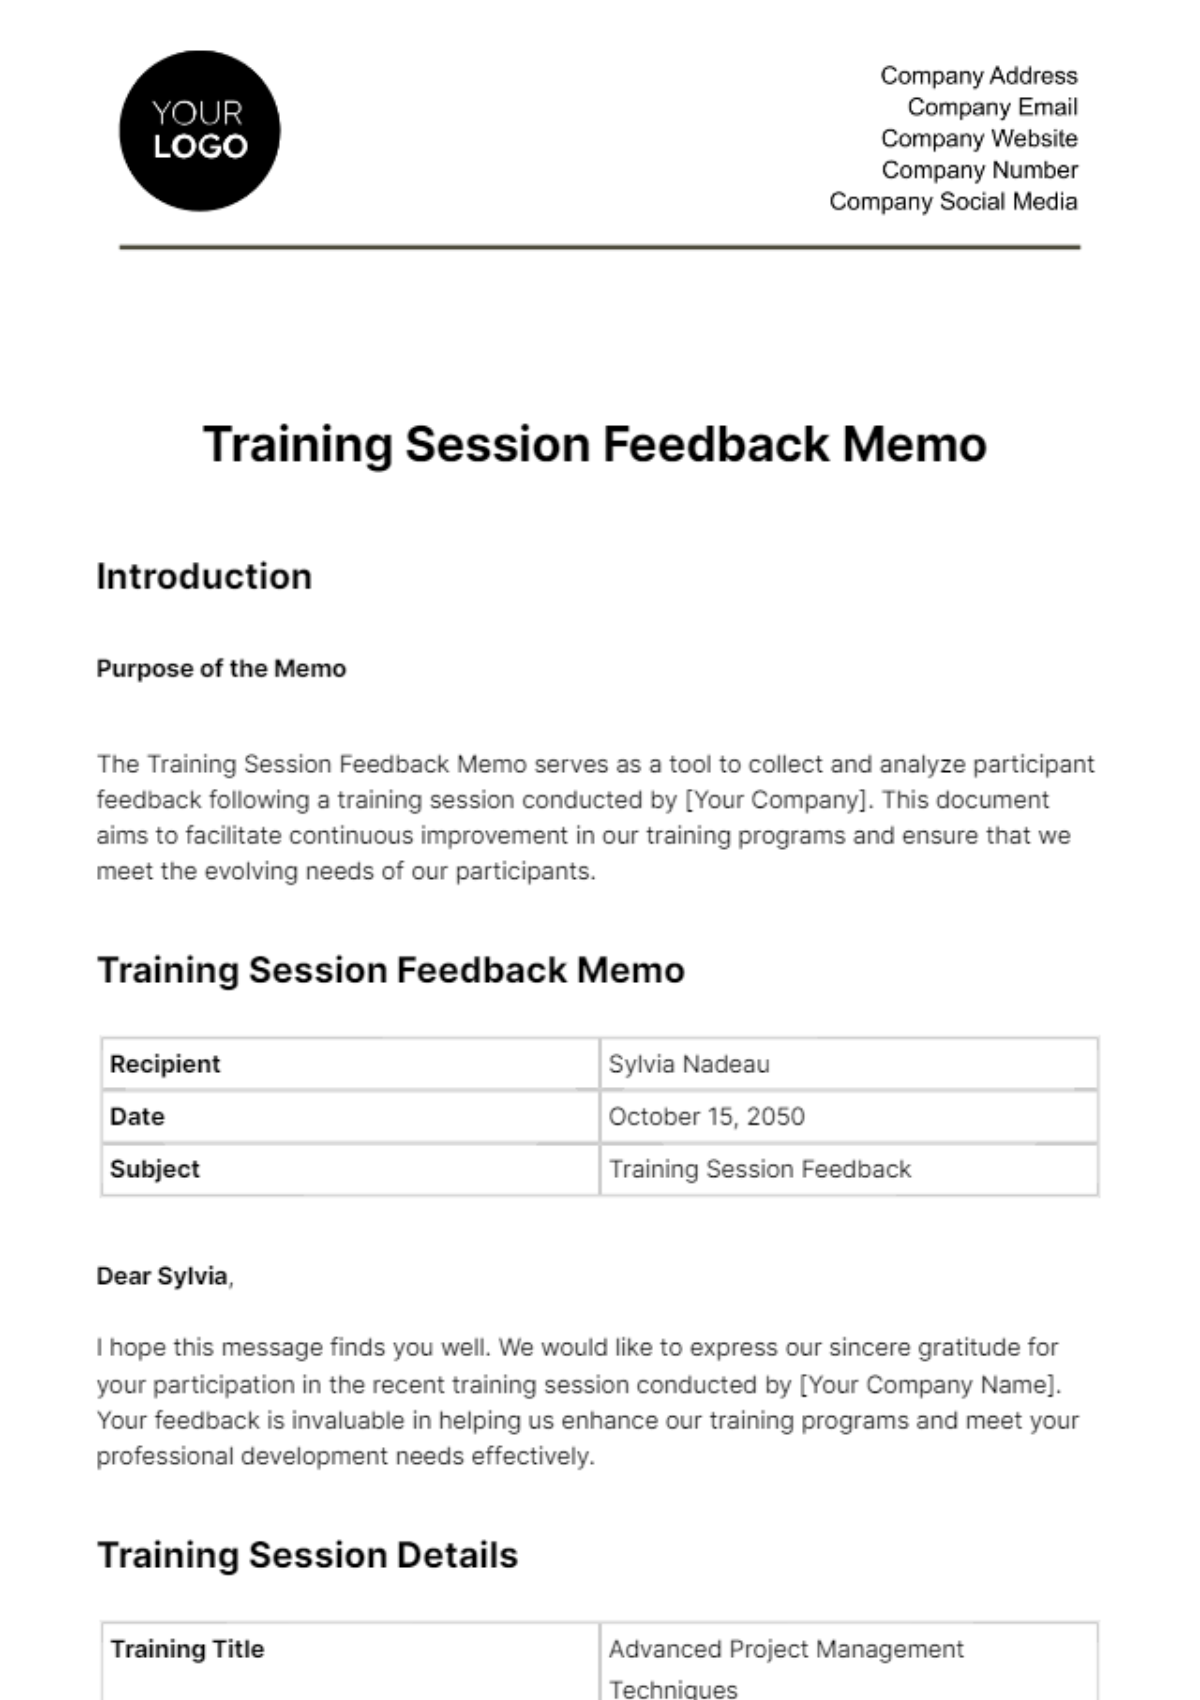 Training Session Feedback Memo HR Template